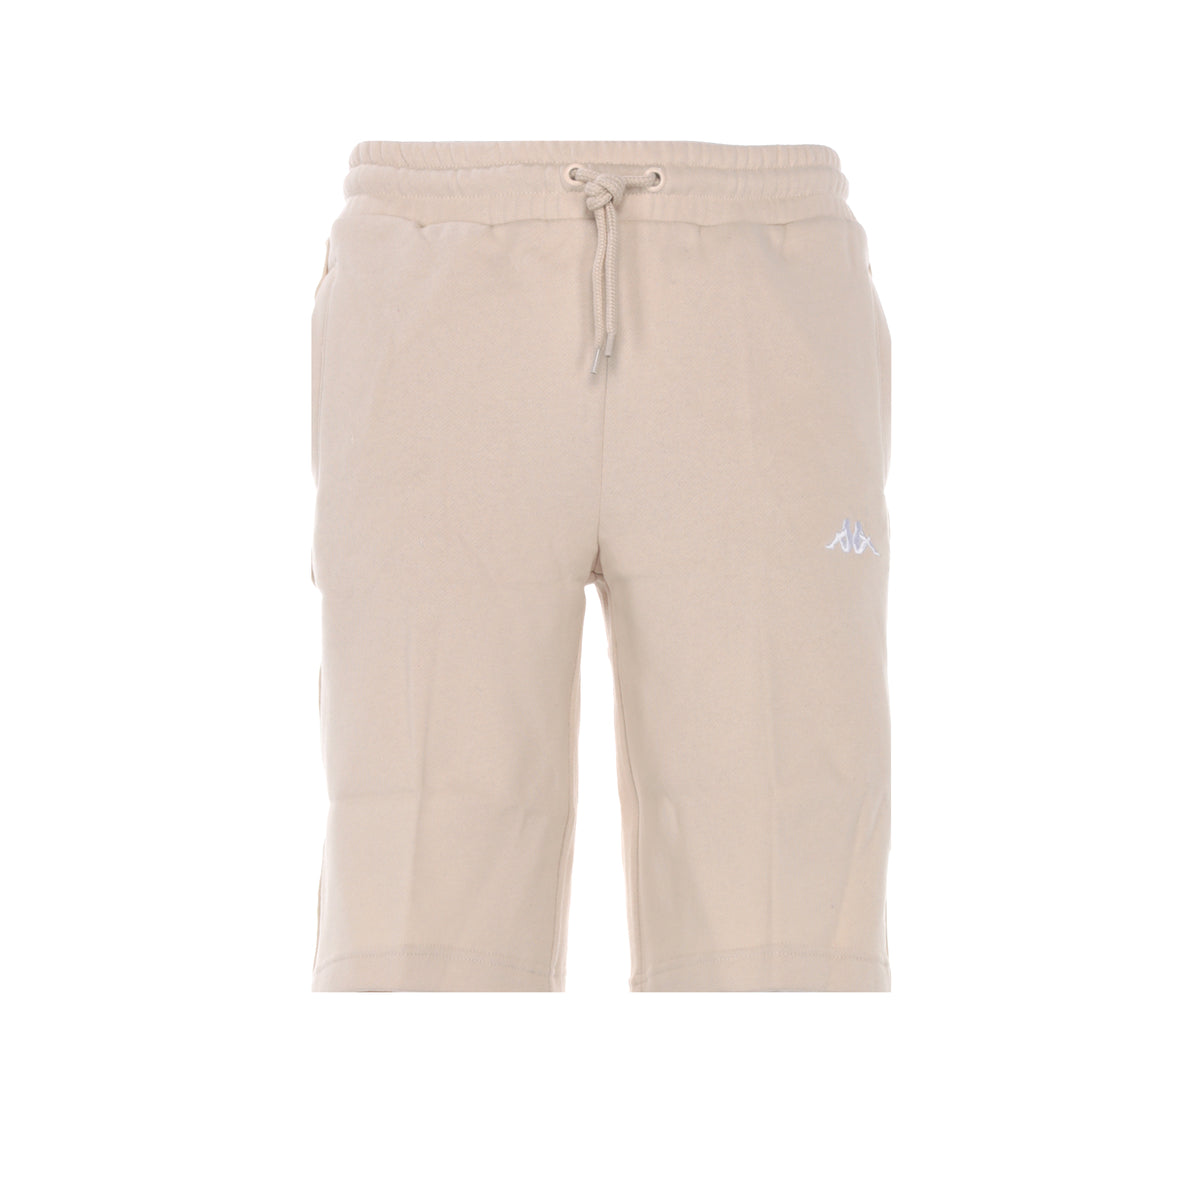 Kappa 222 Banda Marvz Men's Cotton Beige Shorts - SIZE Boutique